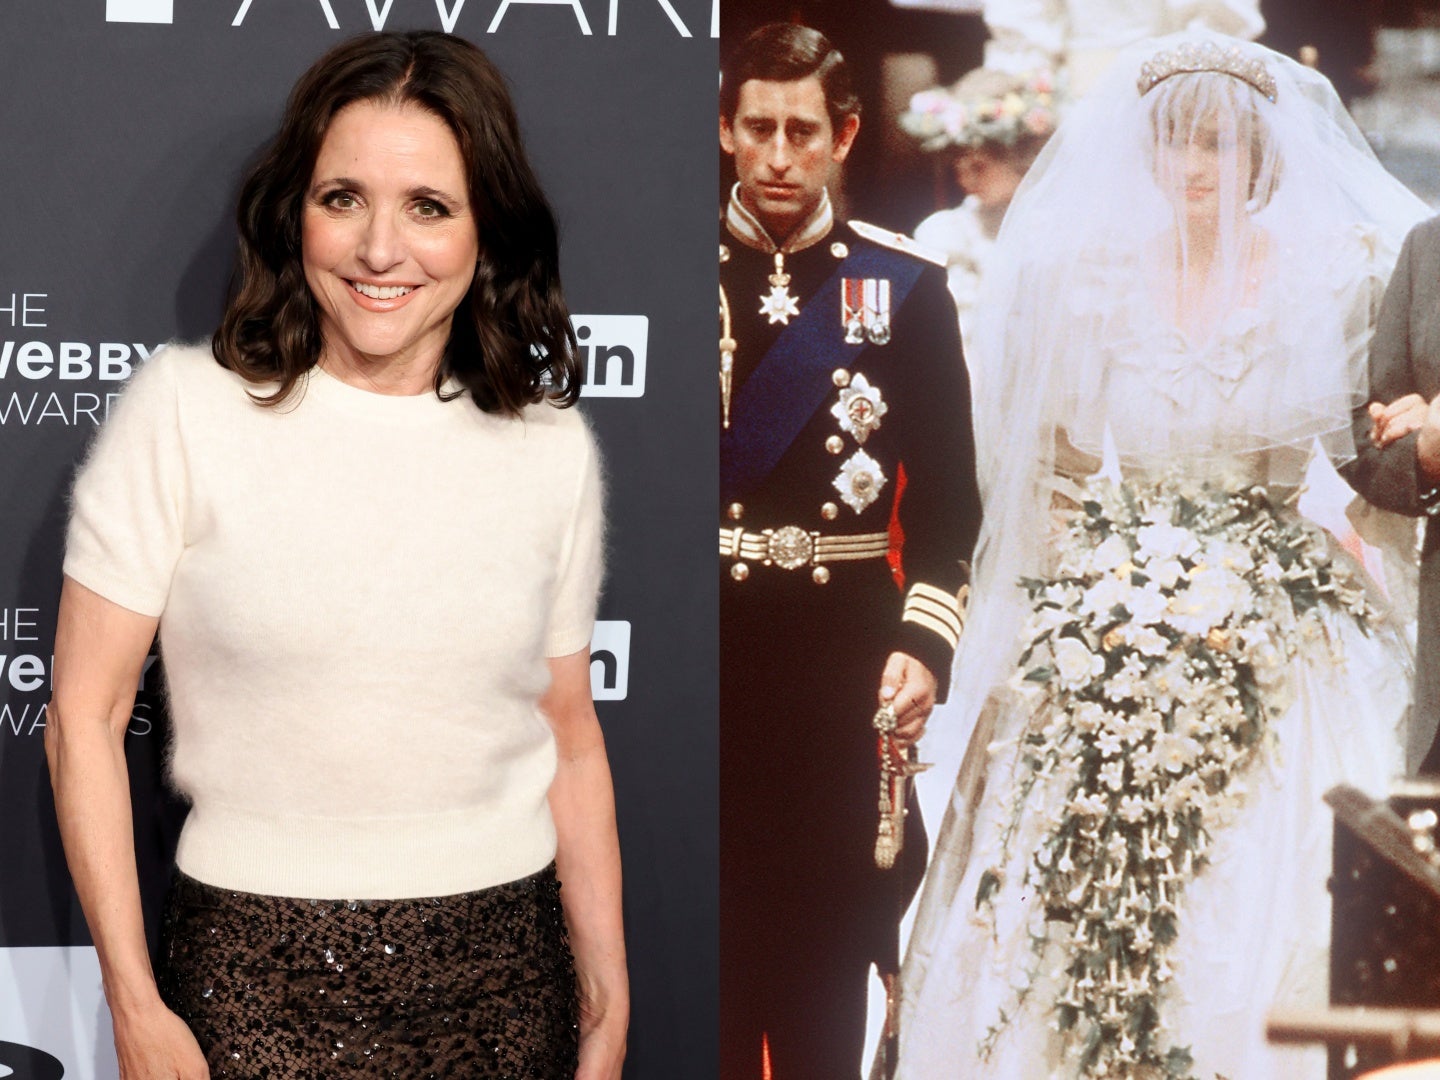 Julia Louis-Dreyfus wore a wedding dress inspired by Princess Diana’s